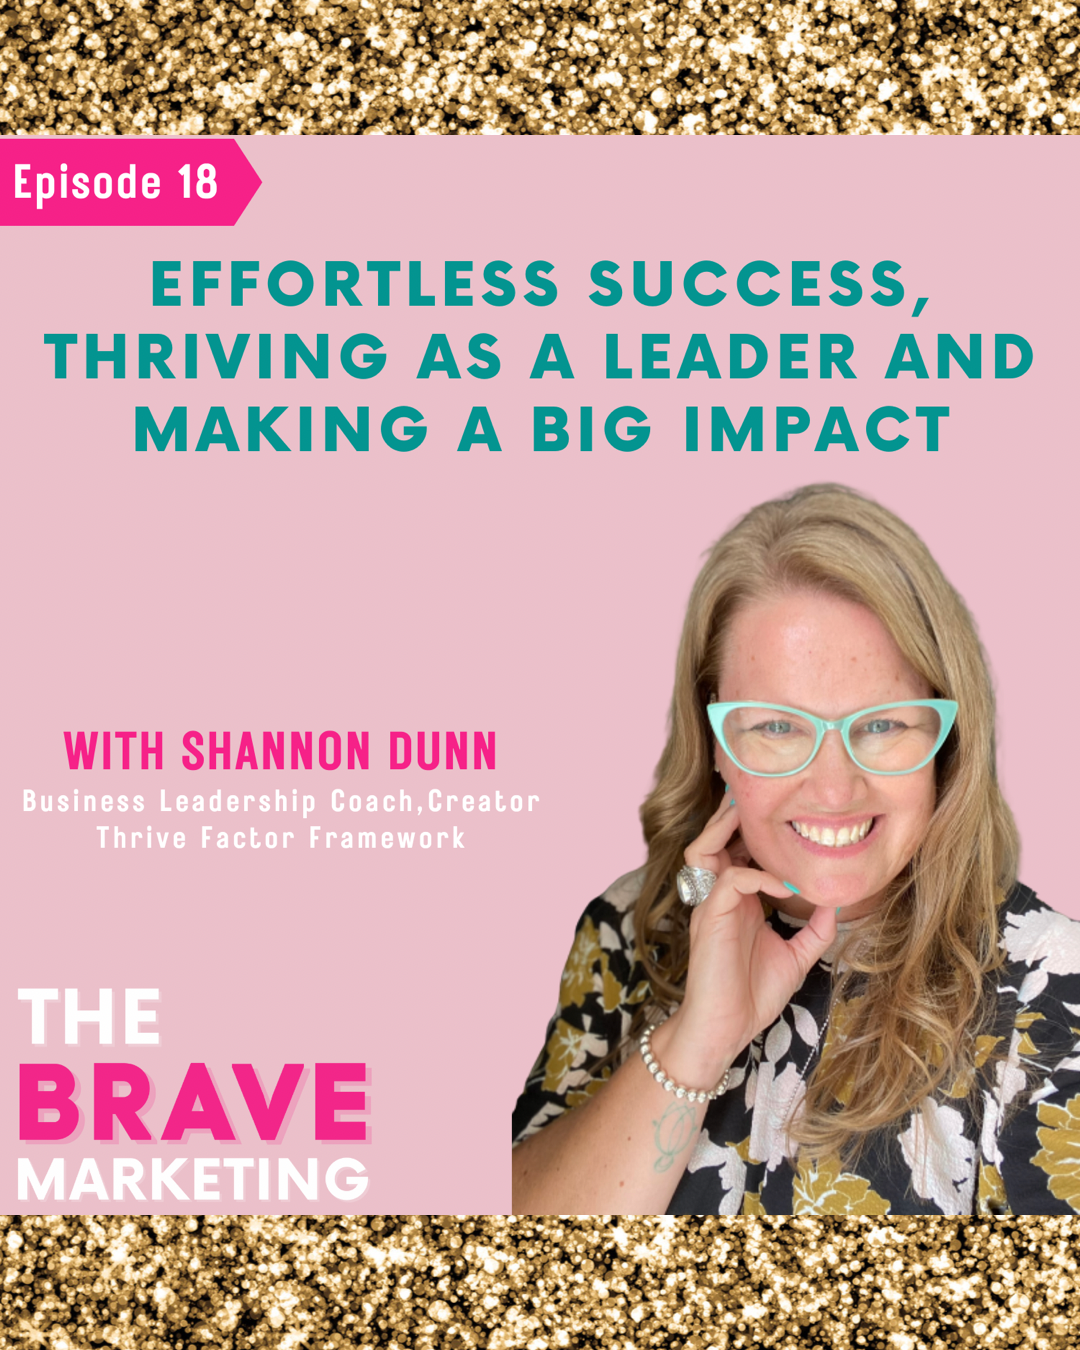 Shannon Dunn | Brave Marketing Podcast episode 18 | Swapna Thomas business coach | coaching for women